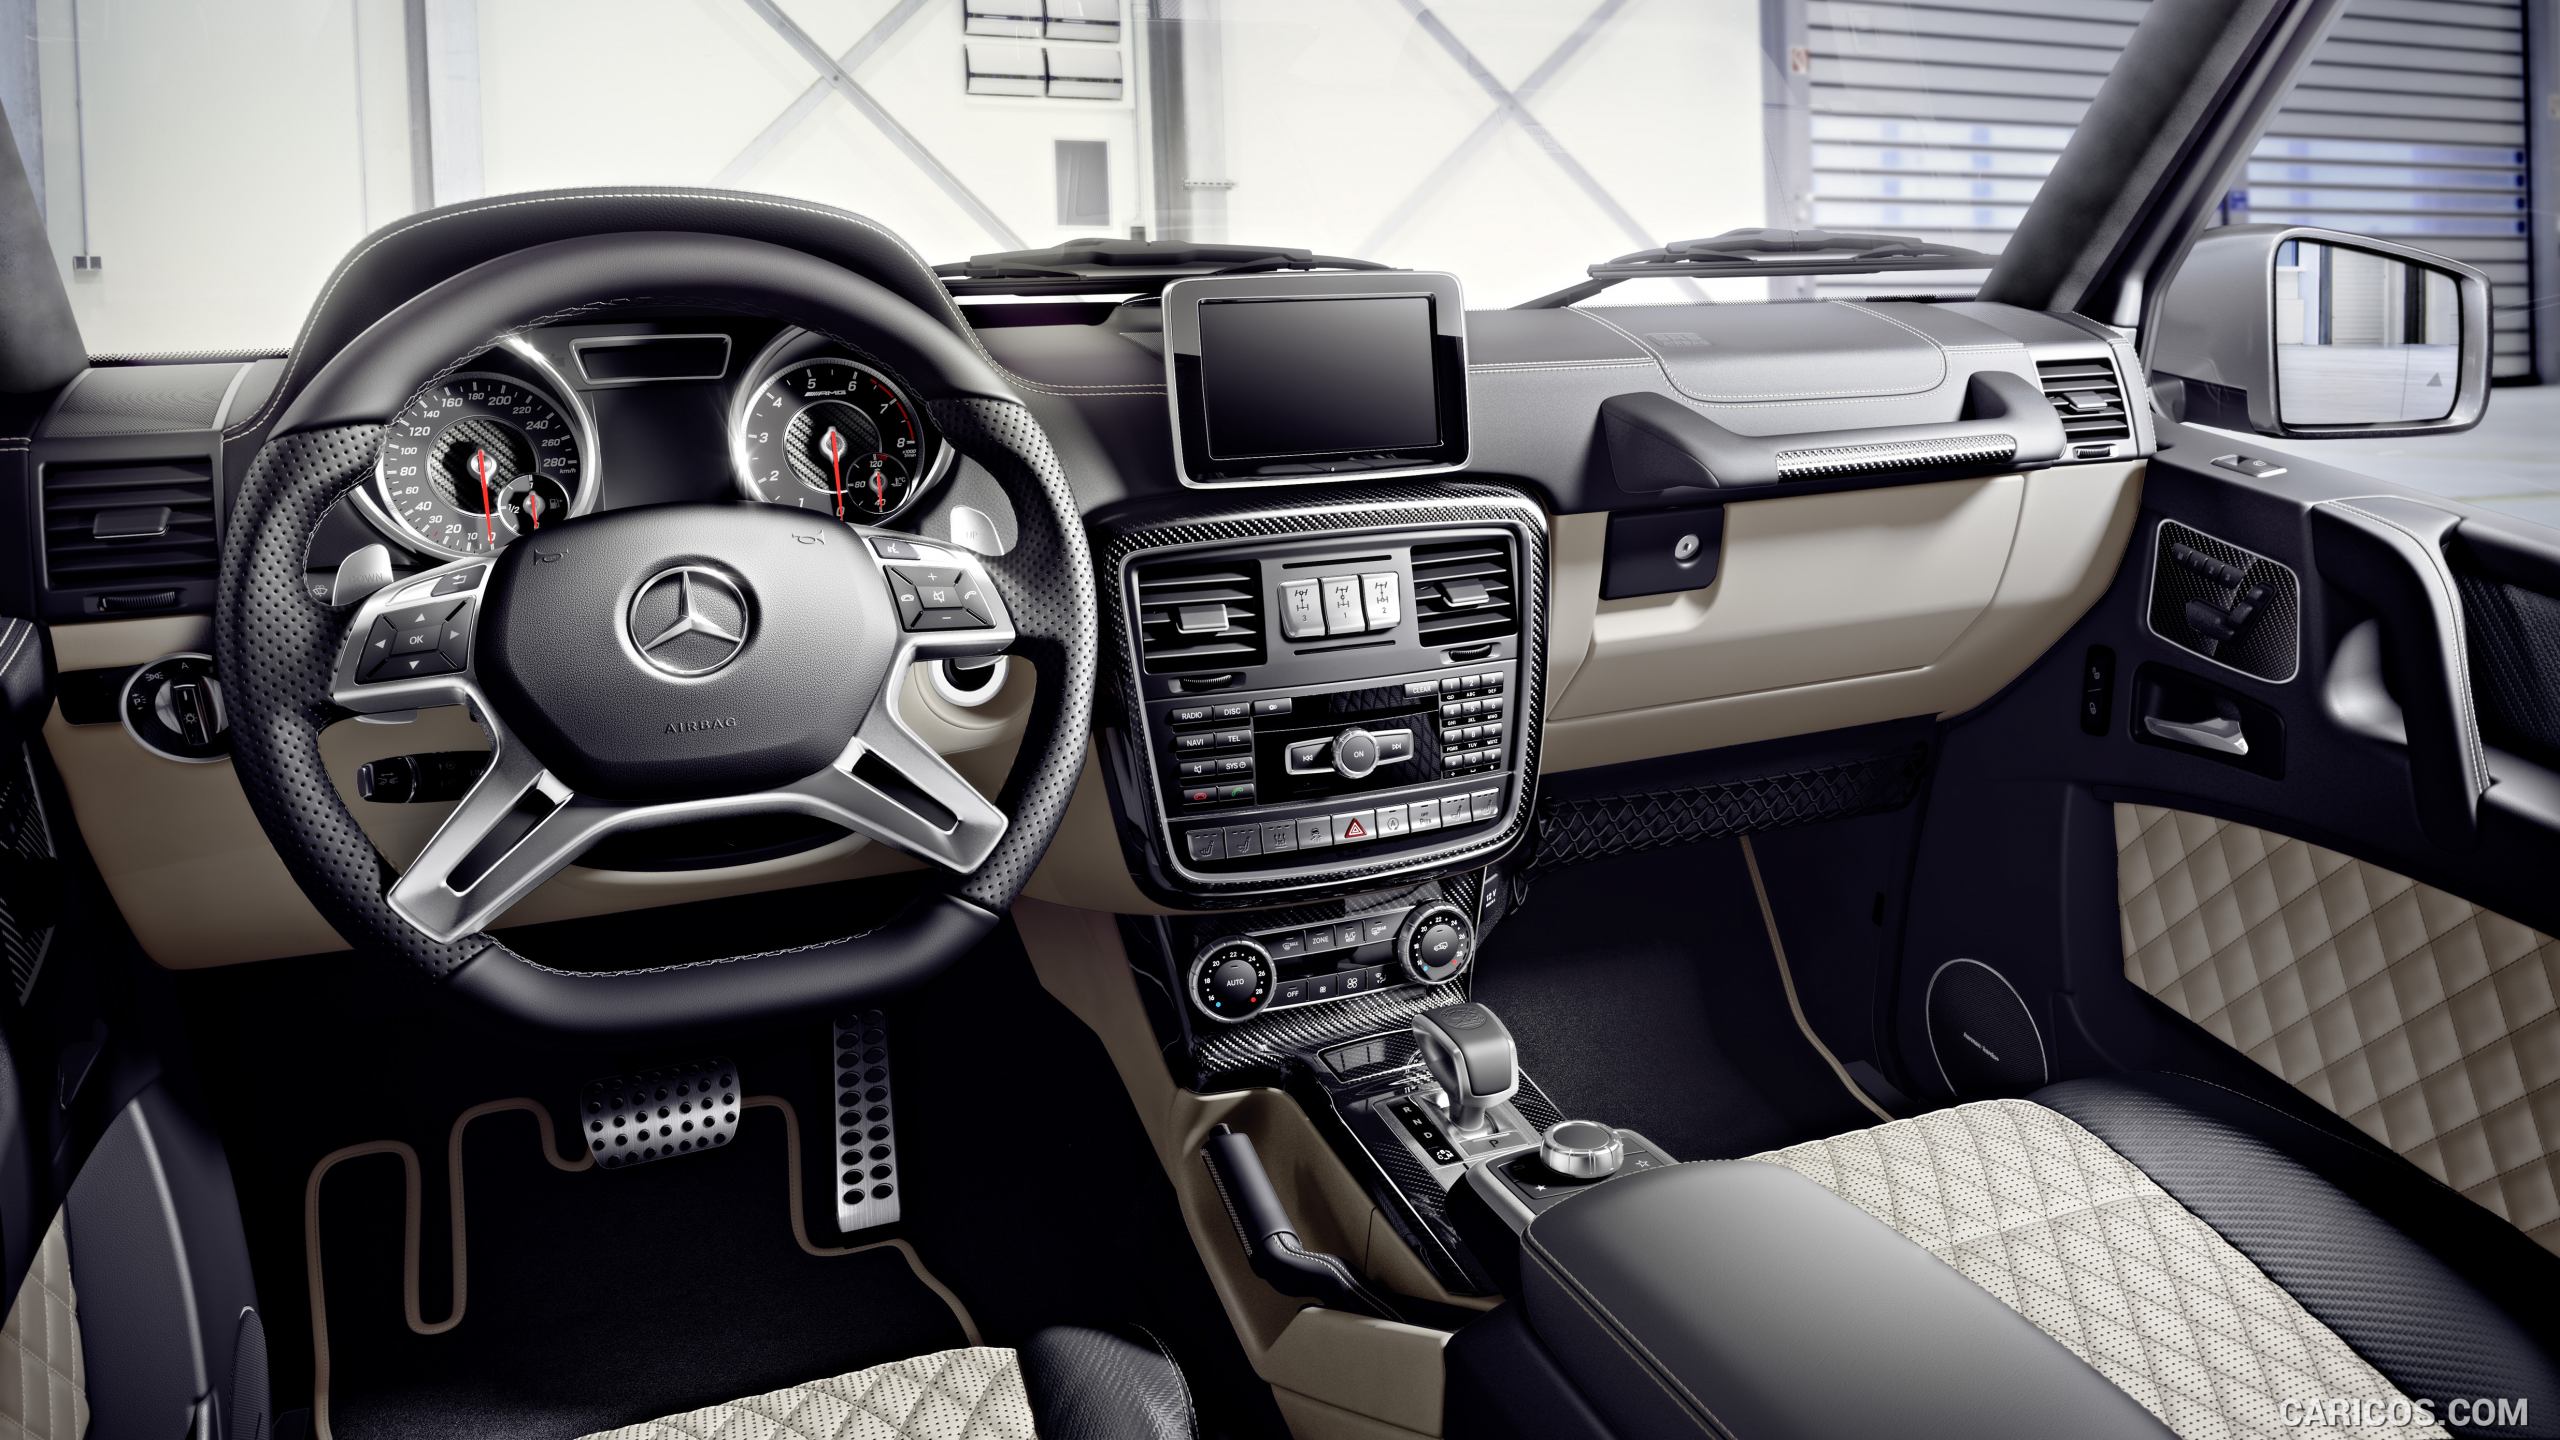 2016 Mercedes-AMG G63 Edition 463 (Designo Nappa Leather Black/Porcelain, AMG Carbon Trim Parts) - Interior, #17 of 48